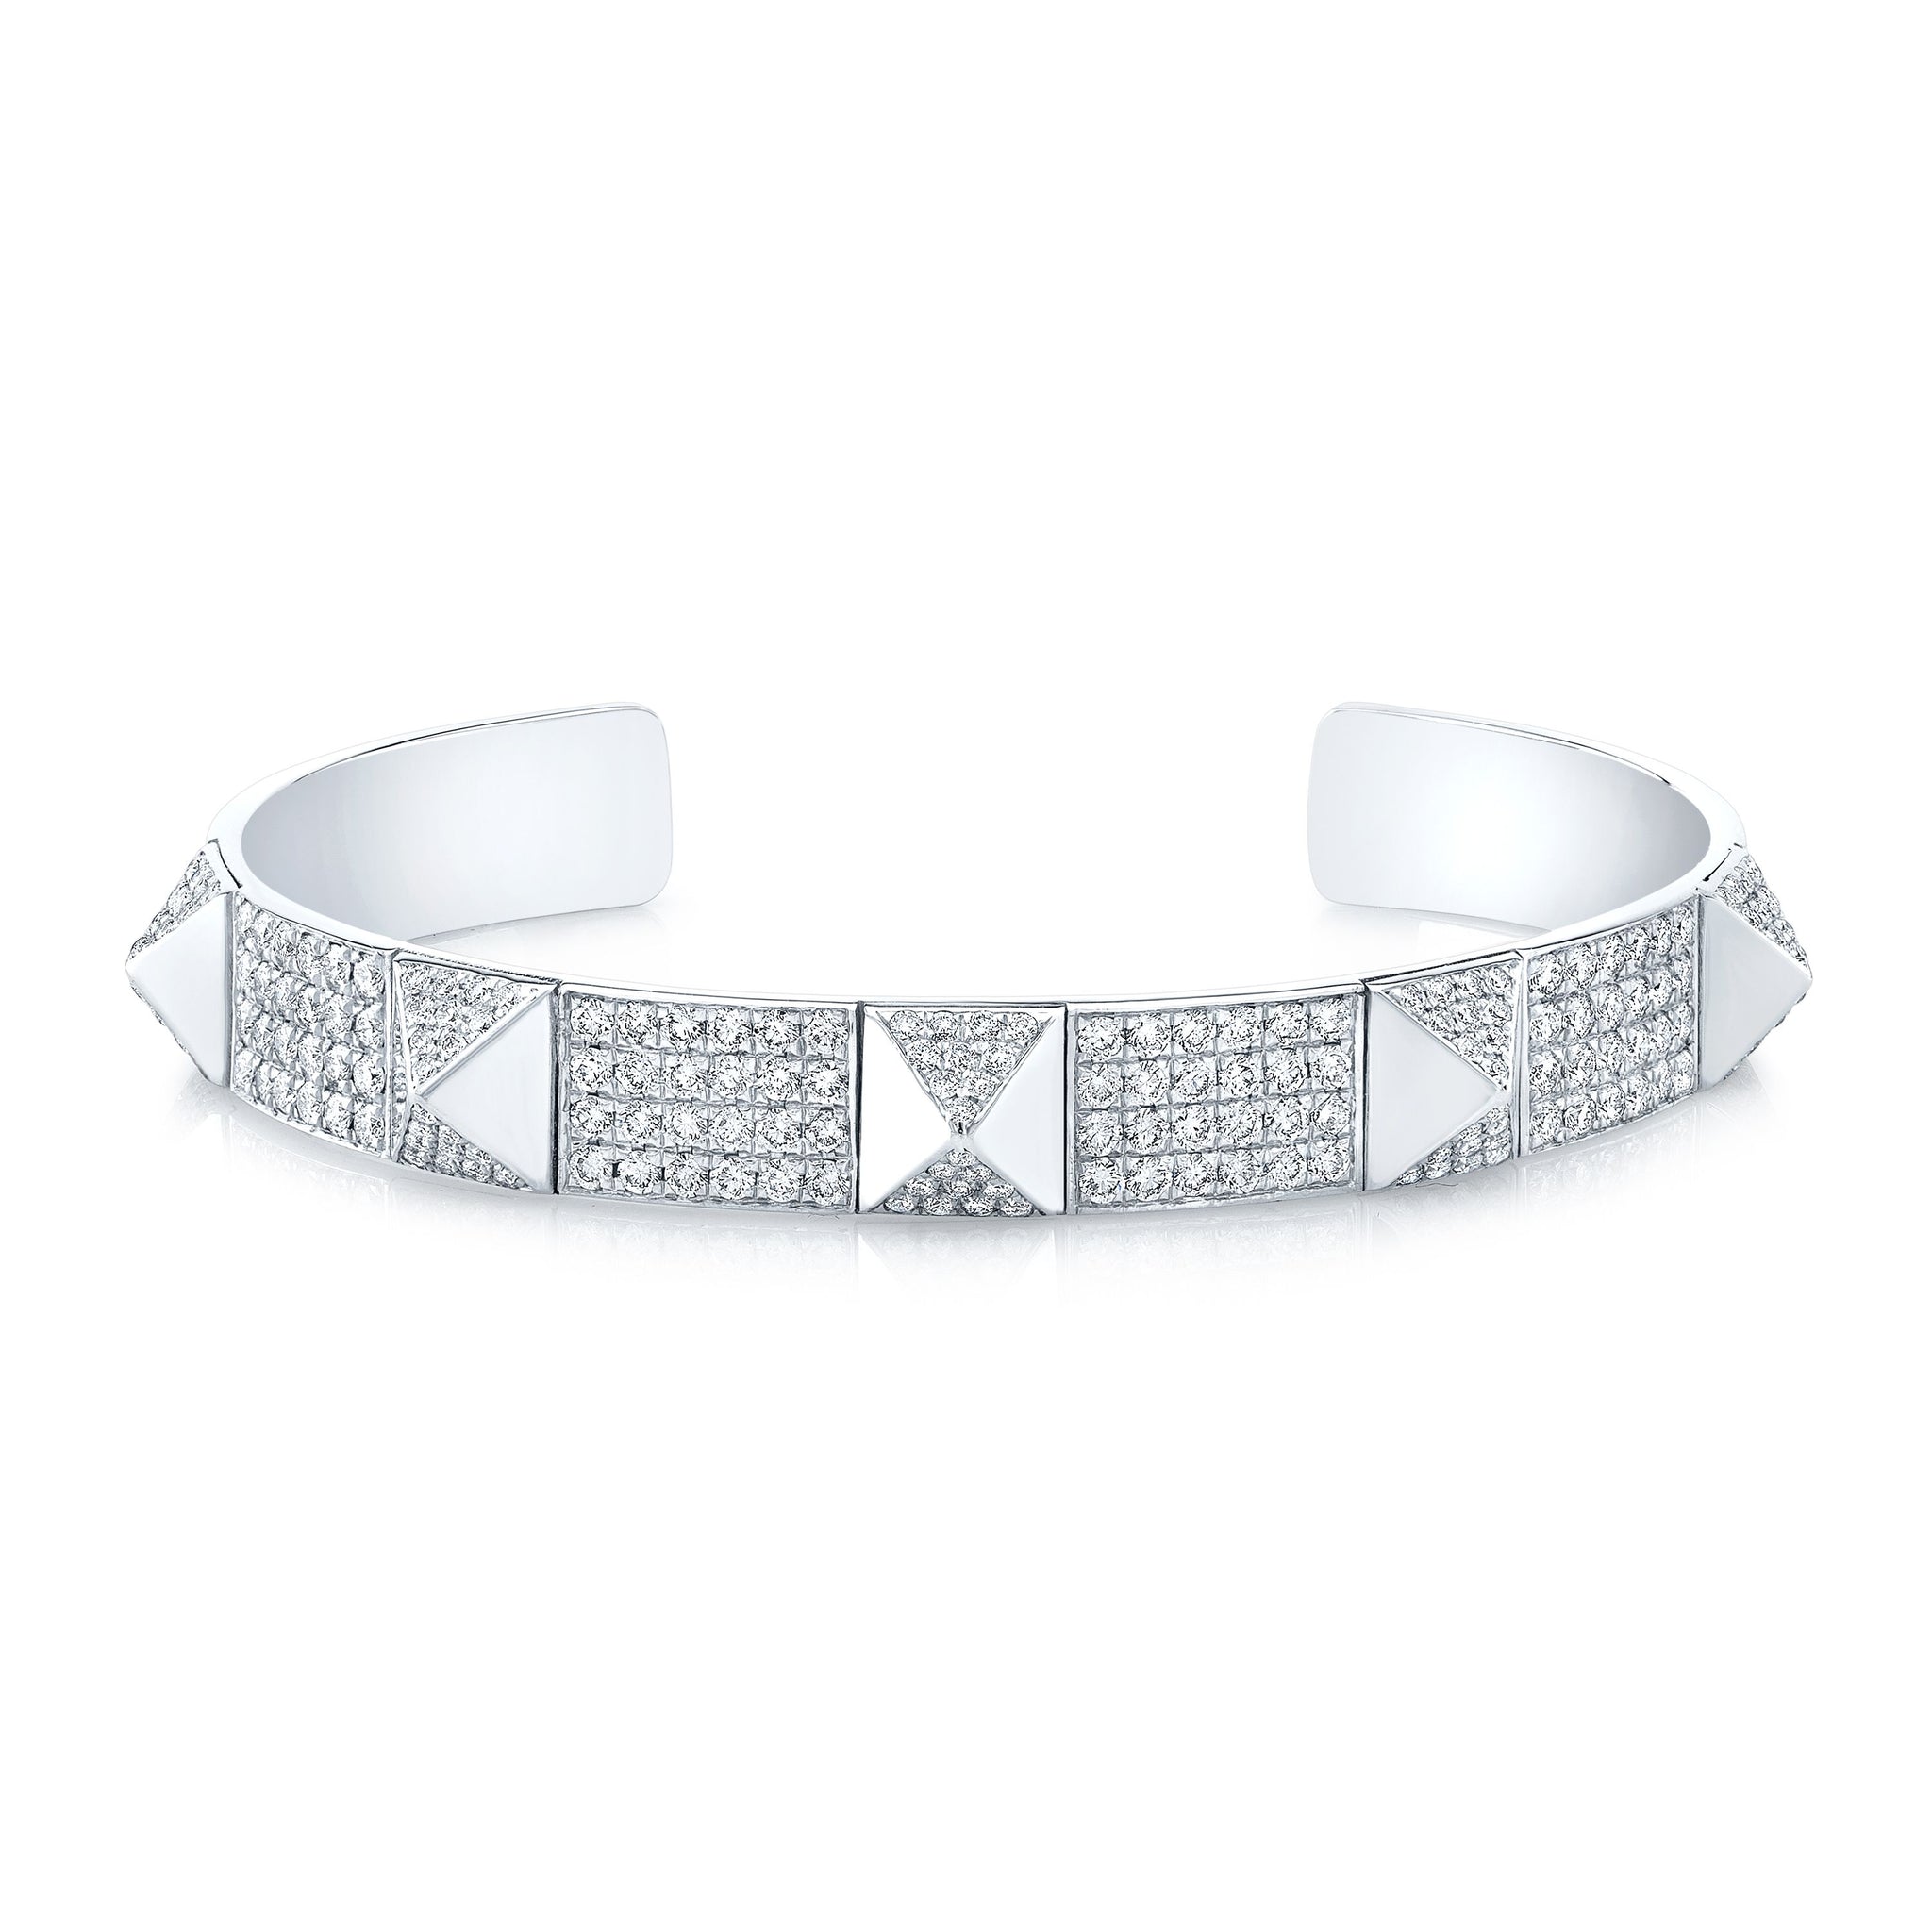 American Diamond and Pearl Studded Bracelet